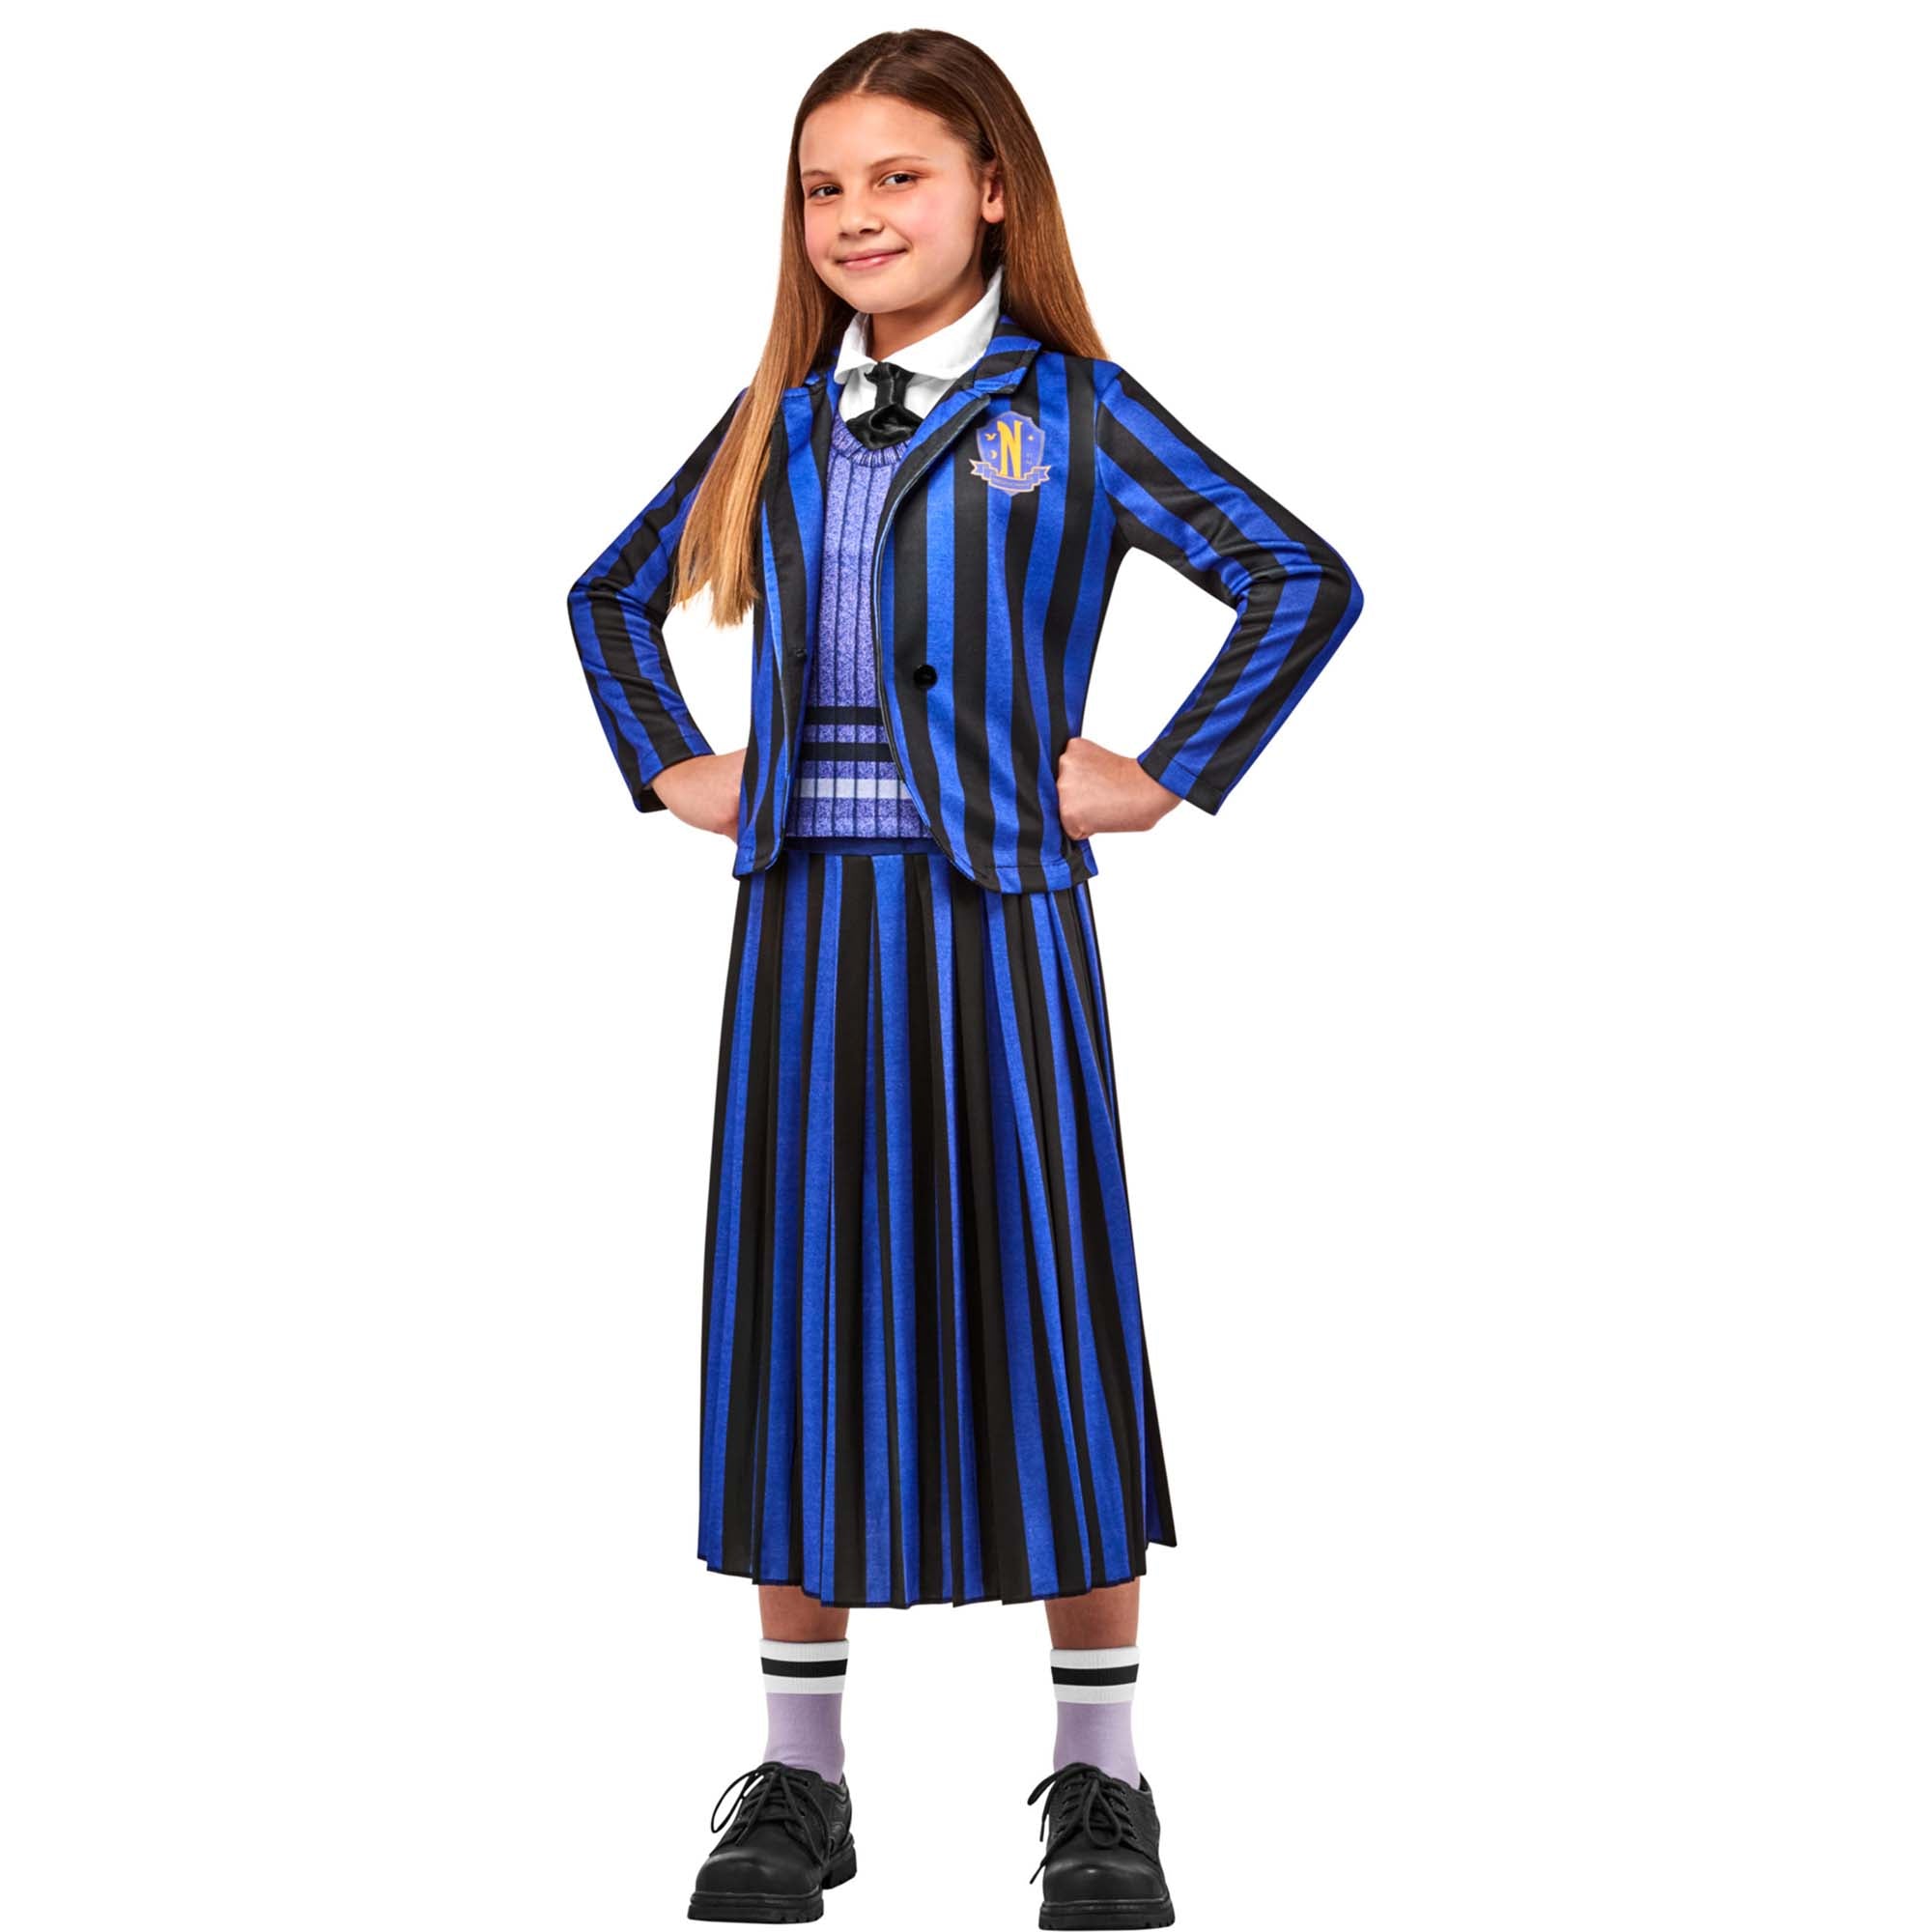 Wednesday Academy Uniform Costume for Kids